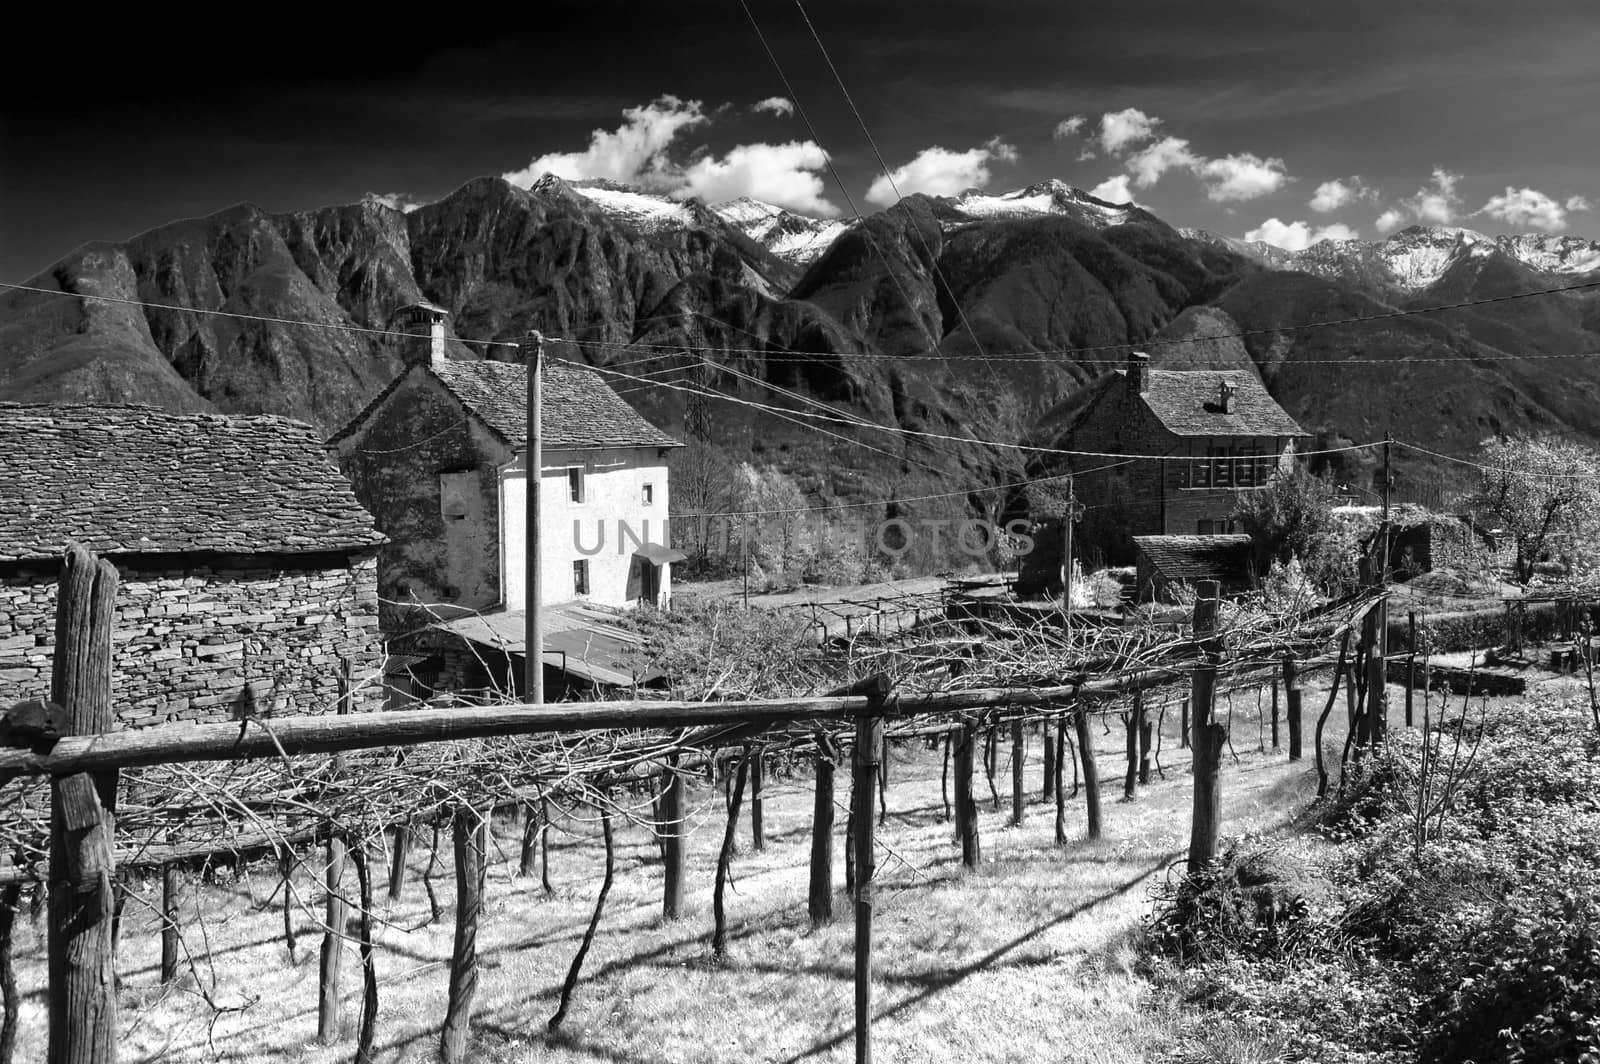 infrared image of an alpine village by aletermi